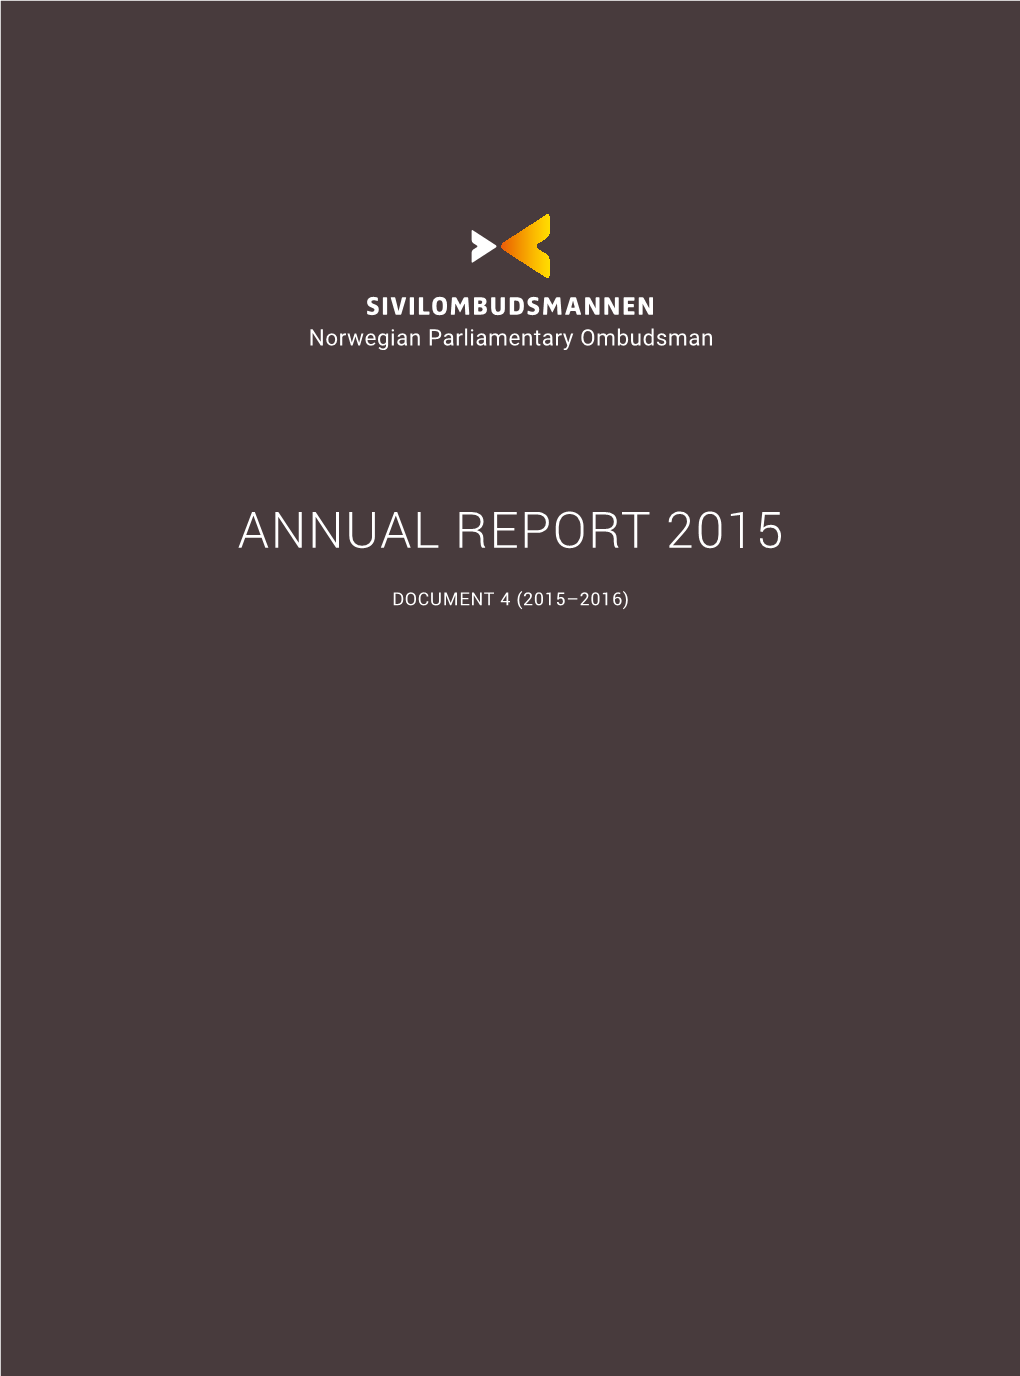 Annual Report 2015 ›